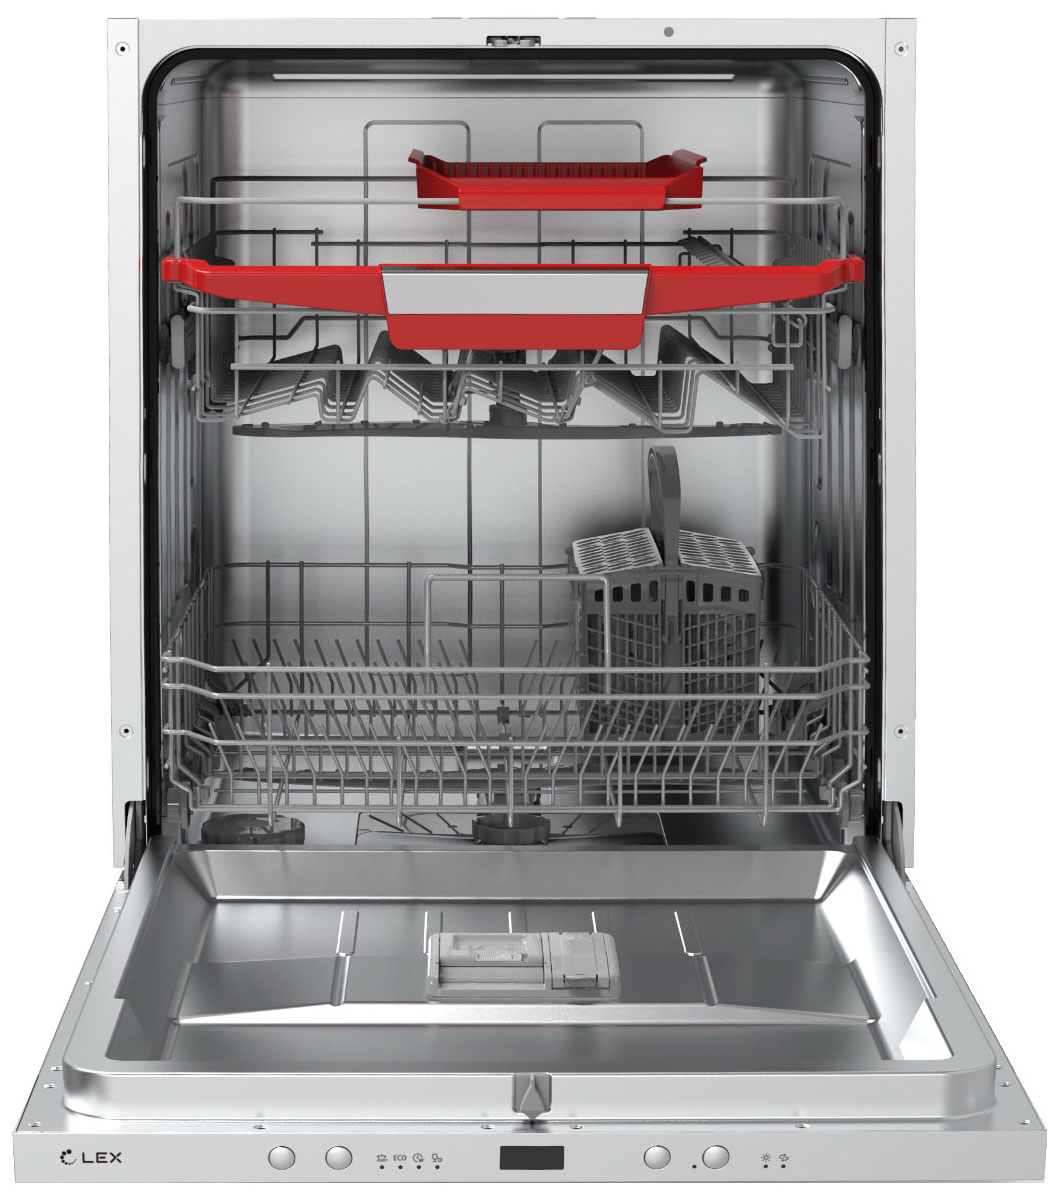 Встраиваемая посудомоечная машина LEX PM 6043 B посудомоечная машина встраиваемая lex pm 4563 b 45 см chmi000301